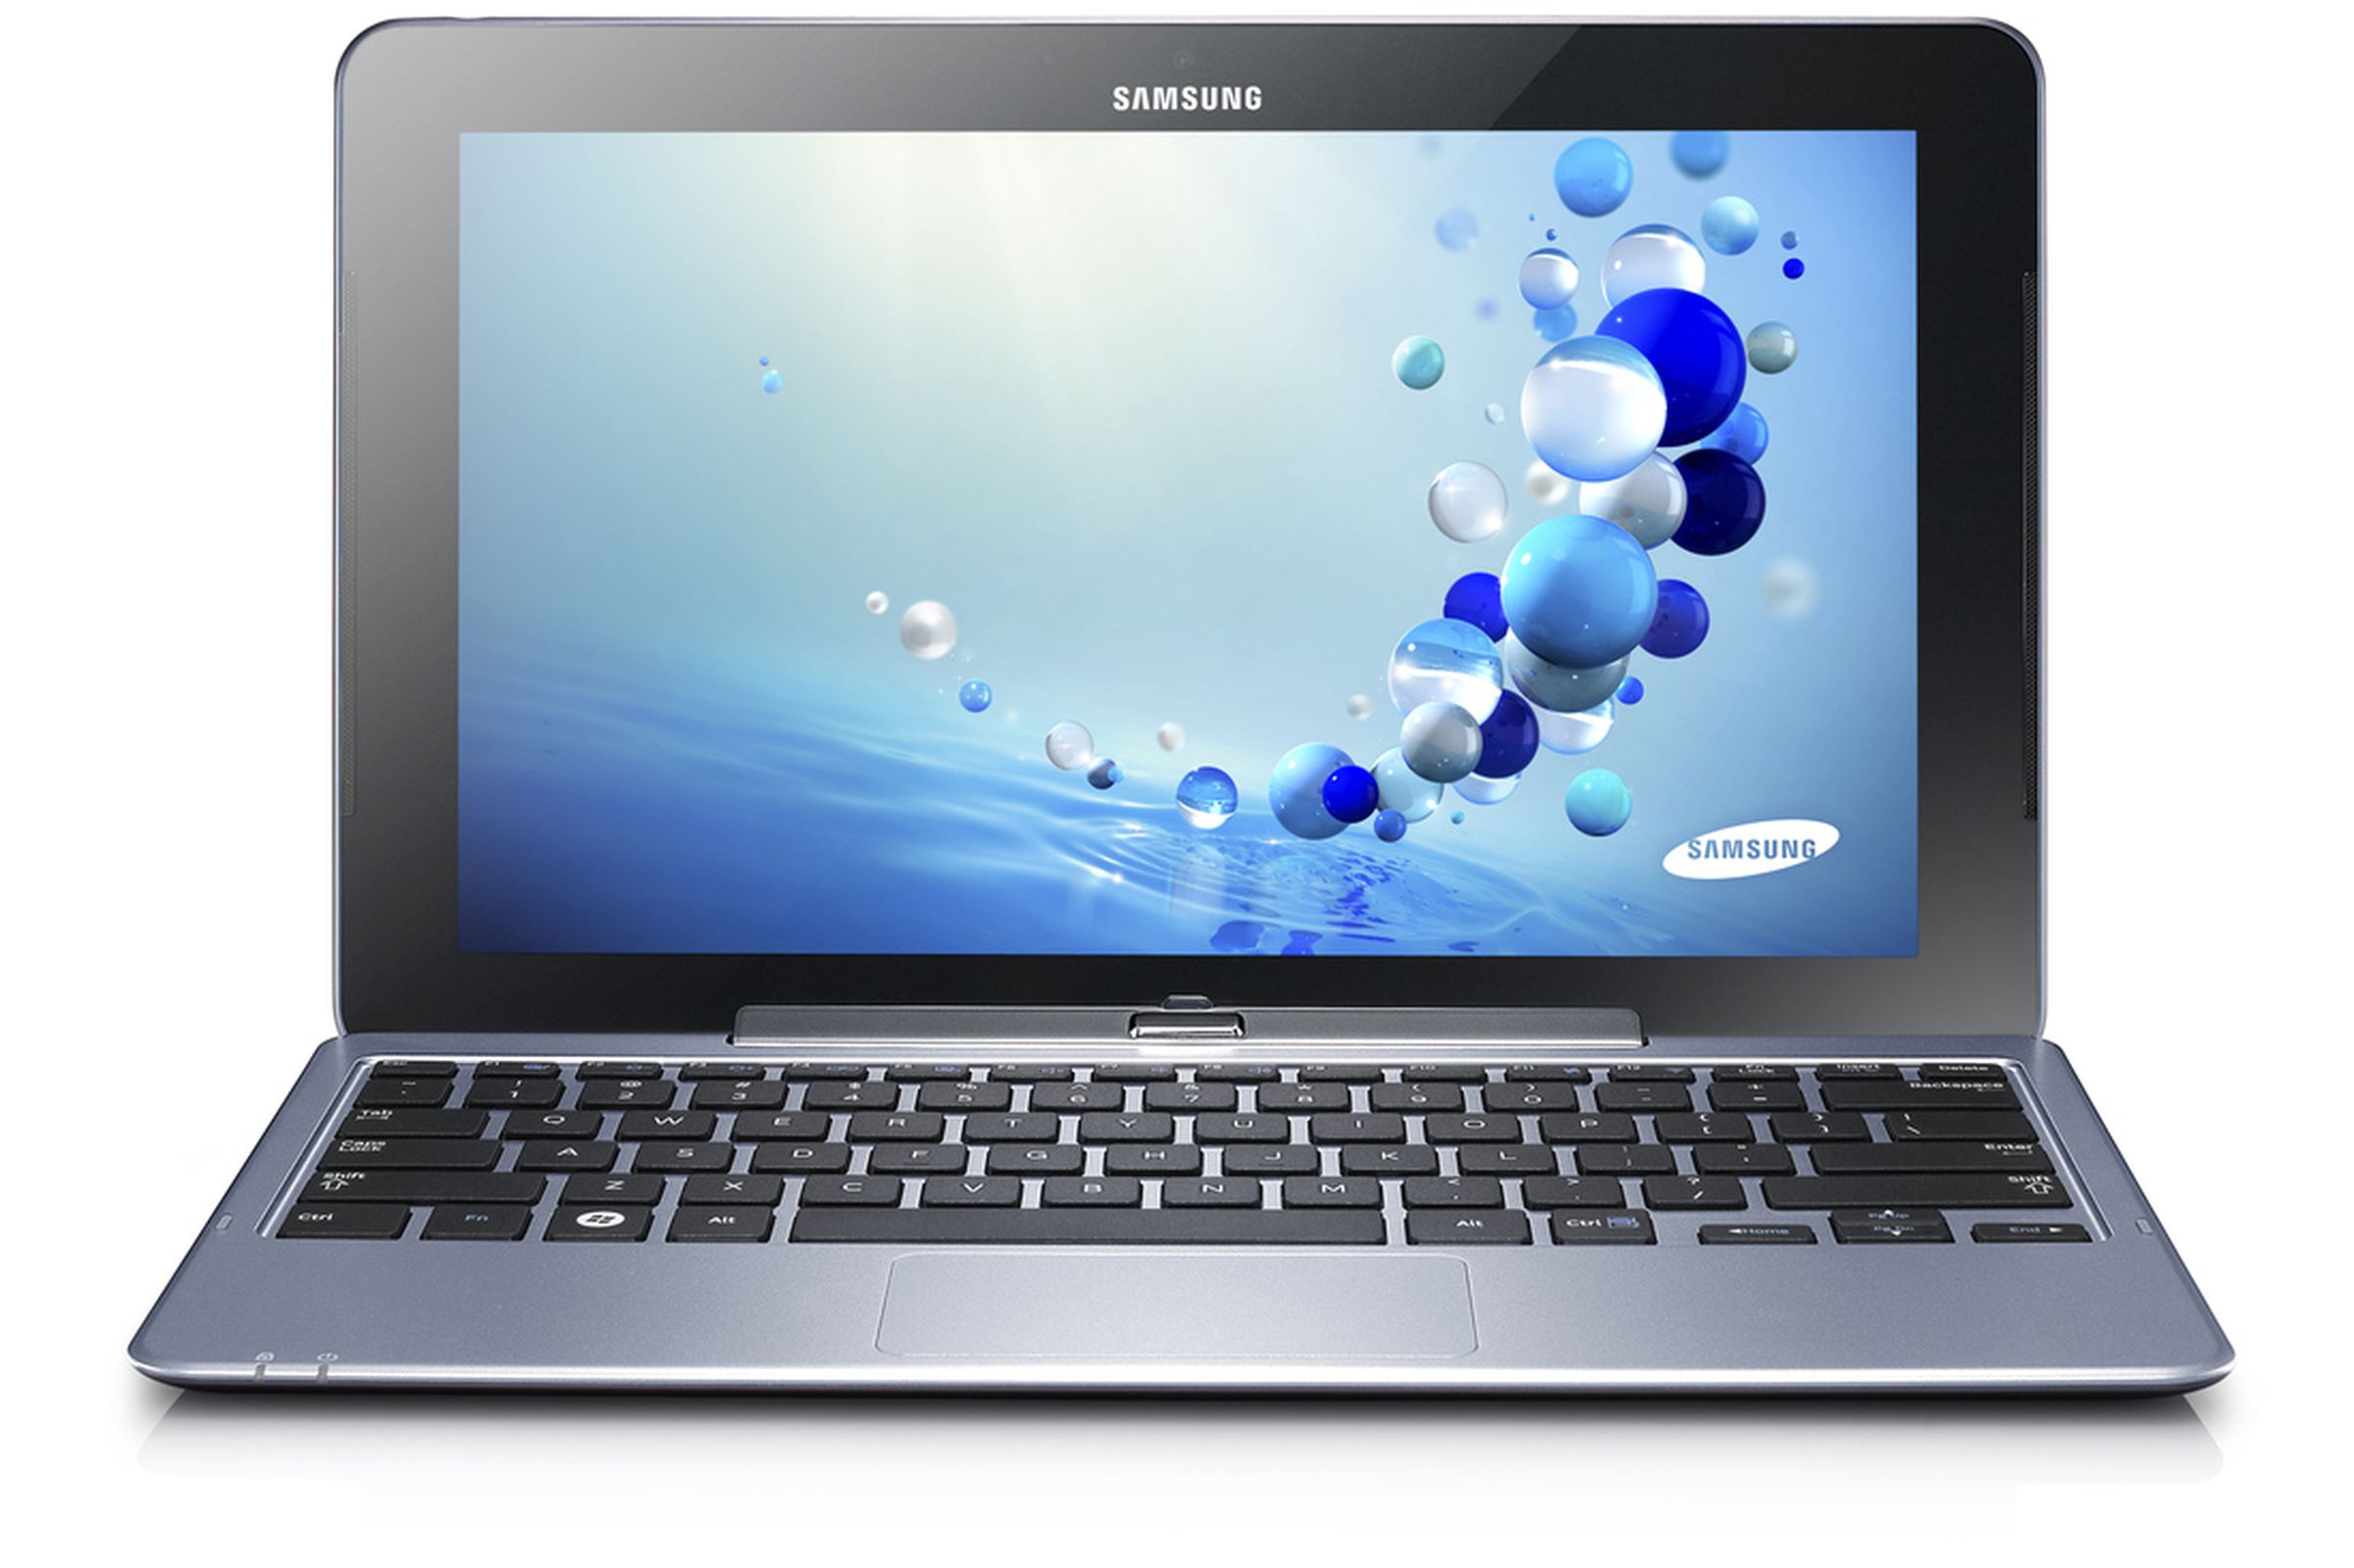 Samsung Ativ Smart PC press images